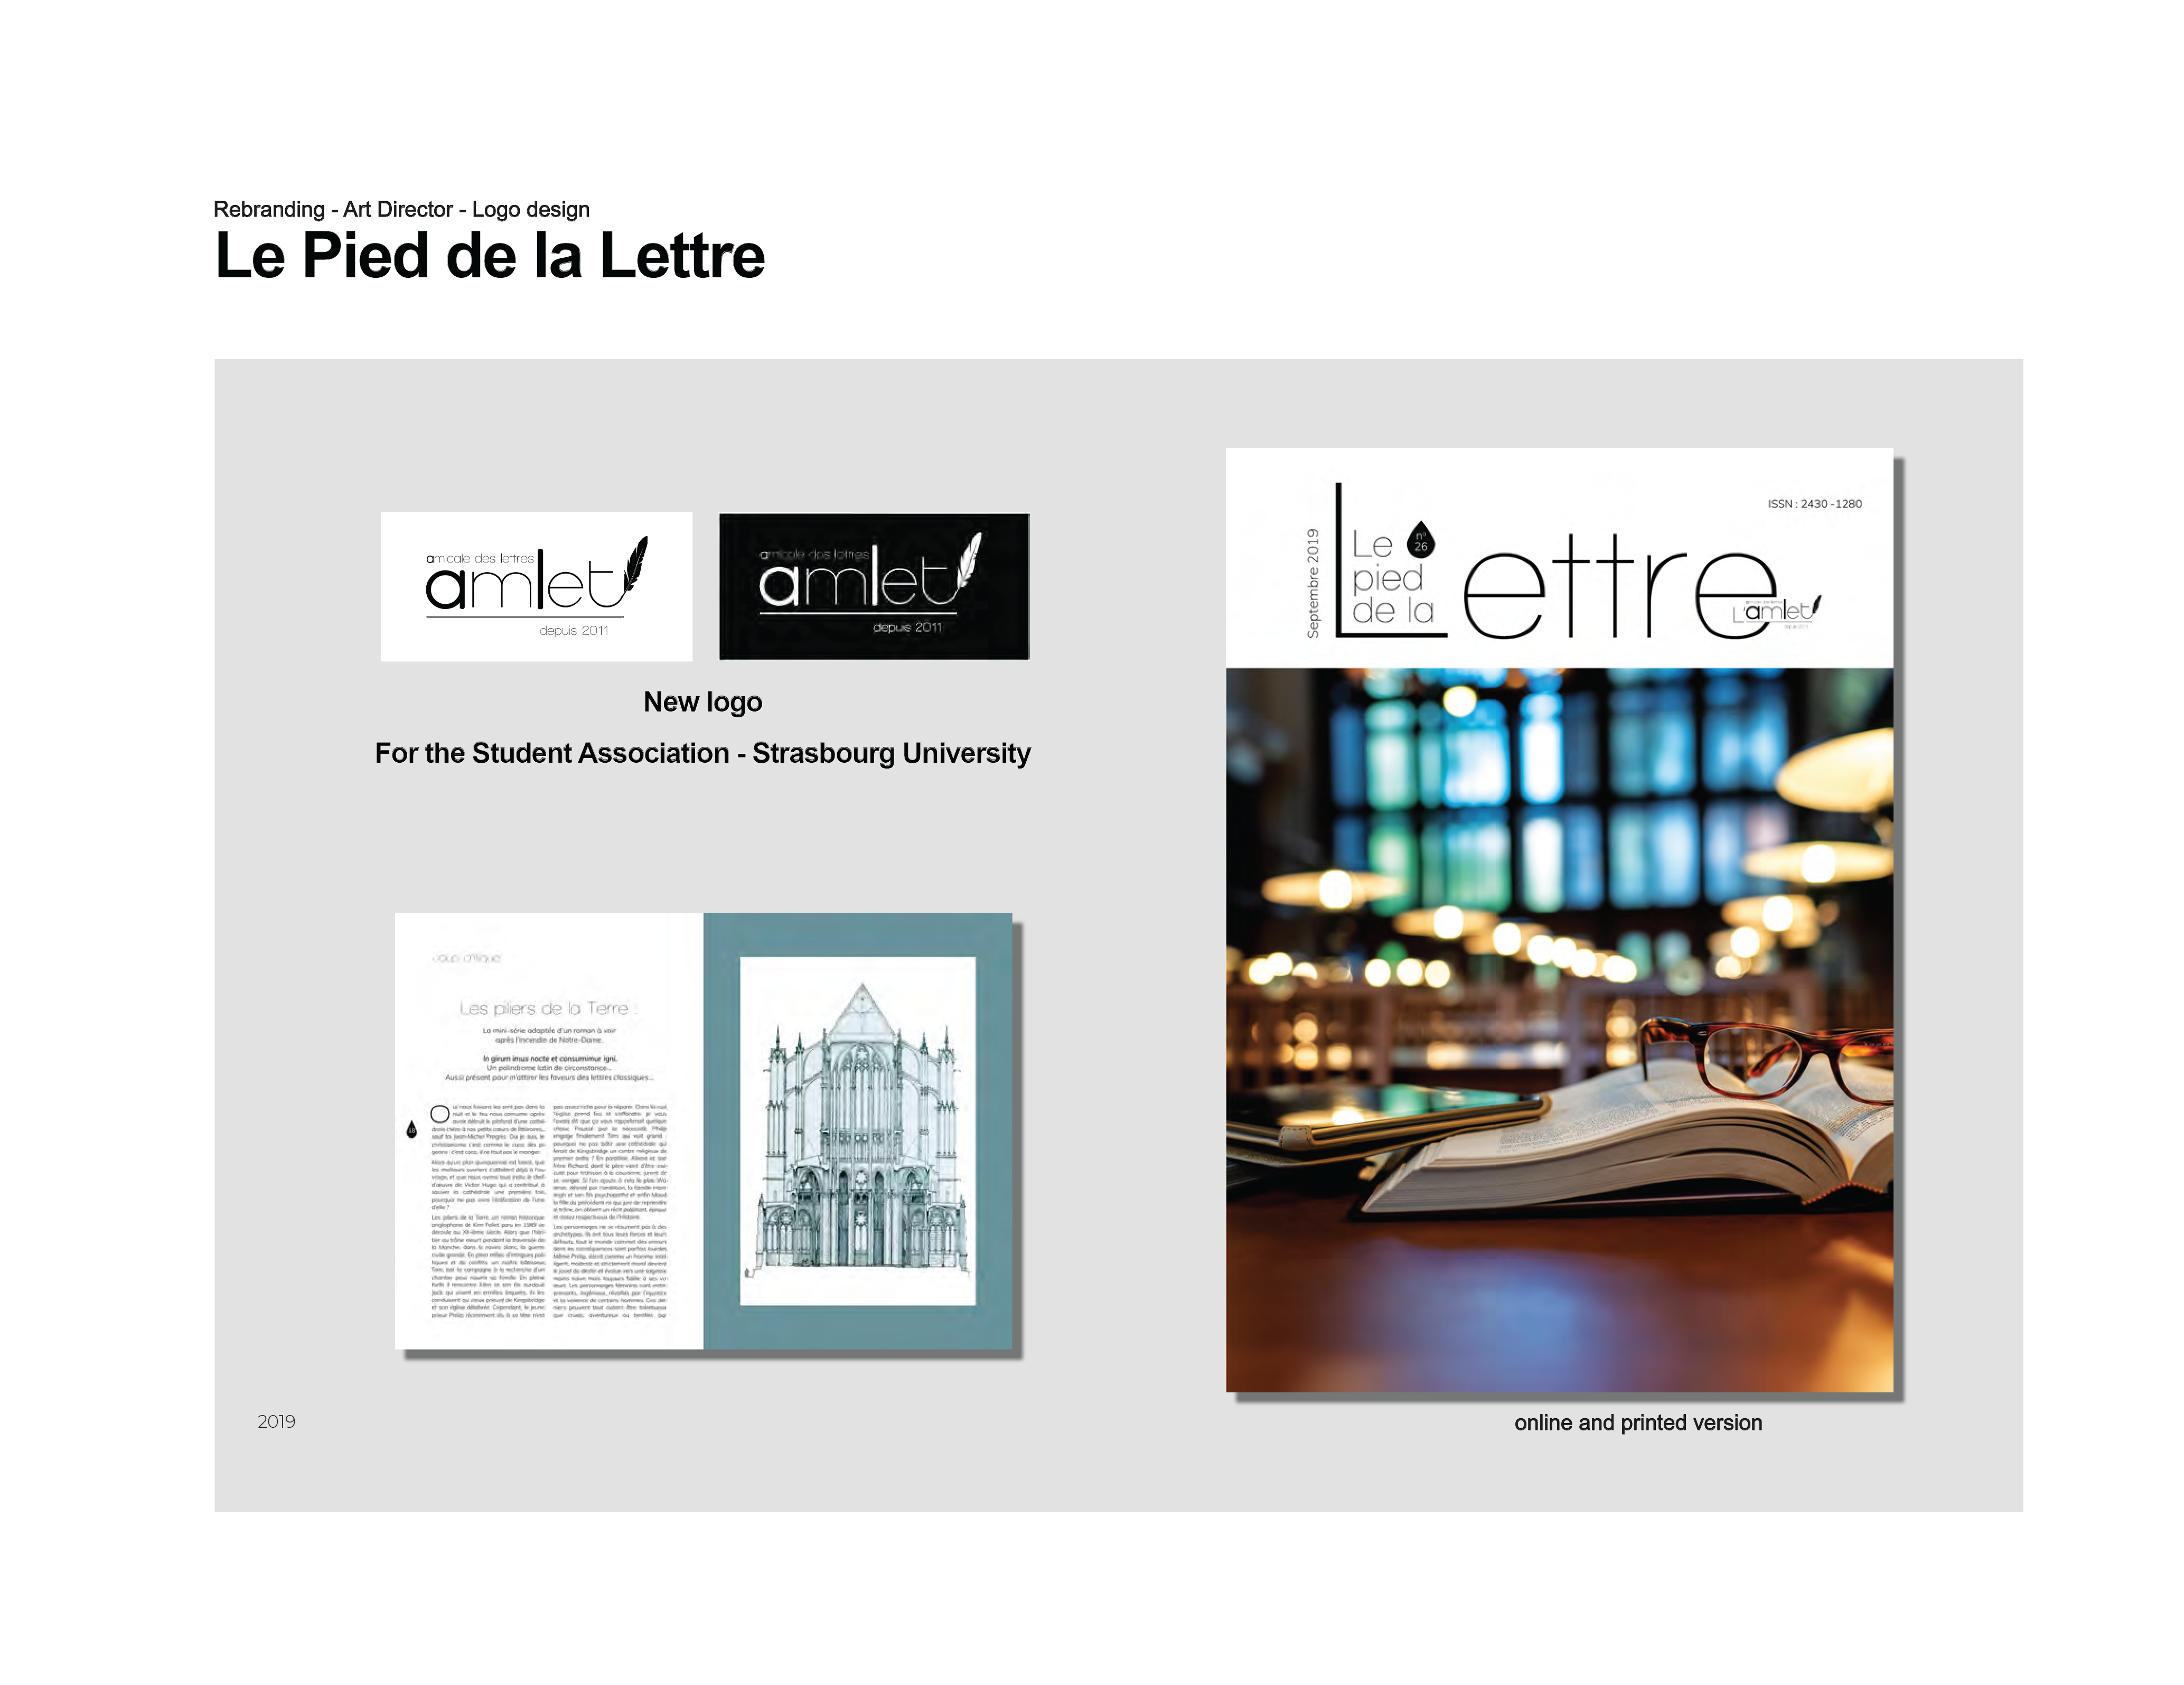 Rebranding - Art Director - Logo design

Le Pied de la Lettre

ISSN: 2430-1280

lc @®

= OTT G&G.

@
=
o
~N
v
L
5
€
&
a
Q
0